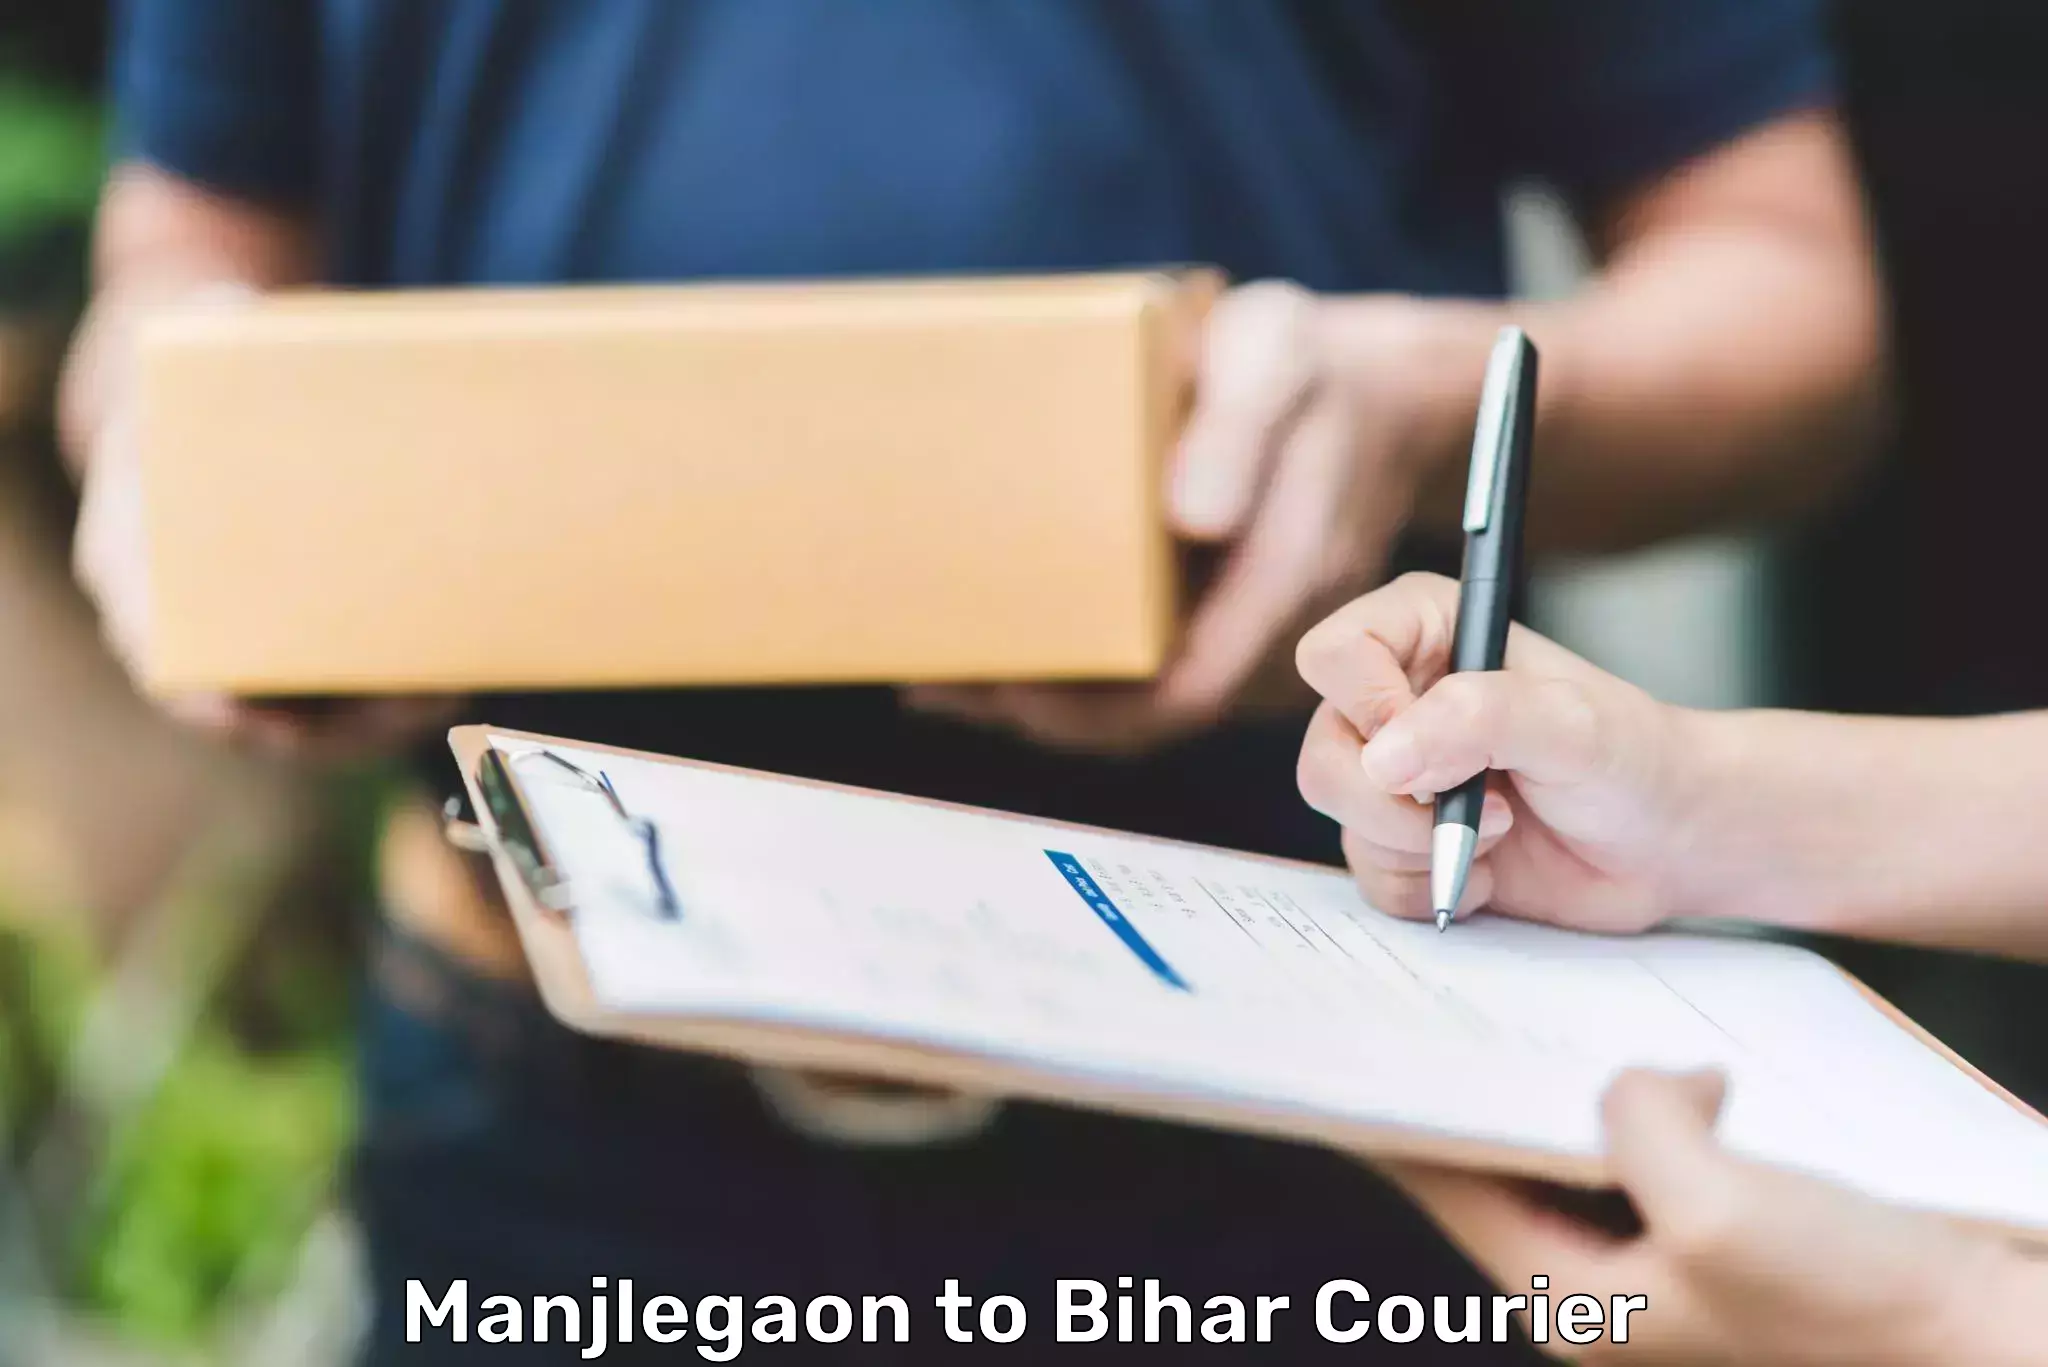 Fast-track shipping solutions Manjlegaon to Bihar